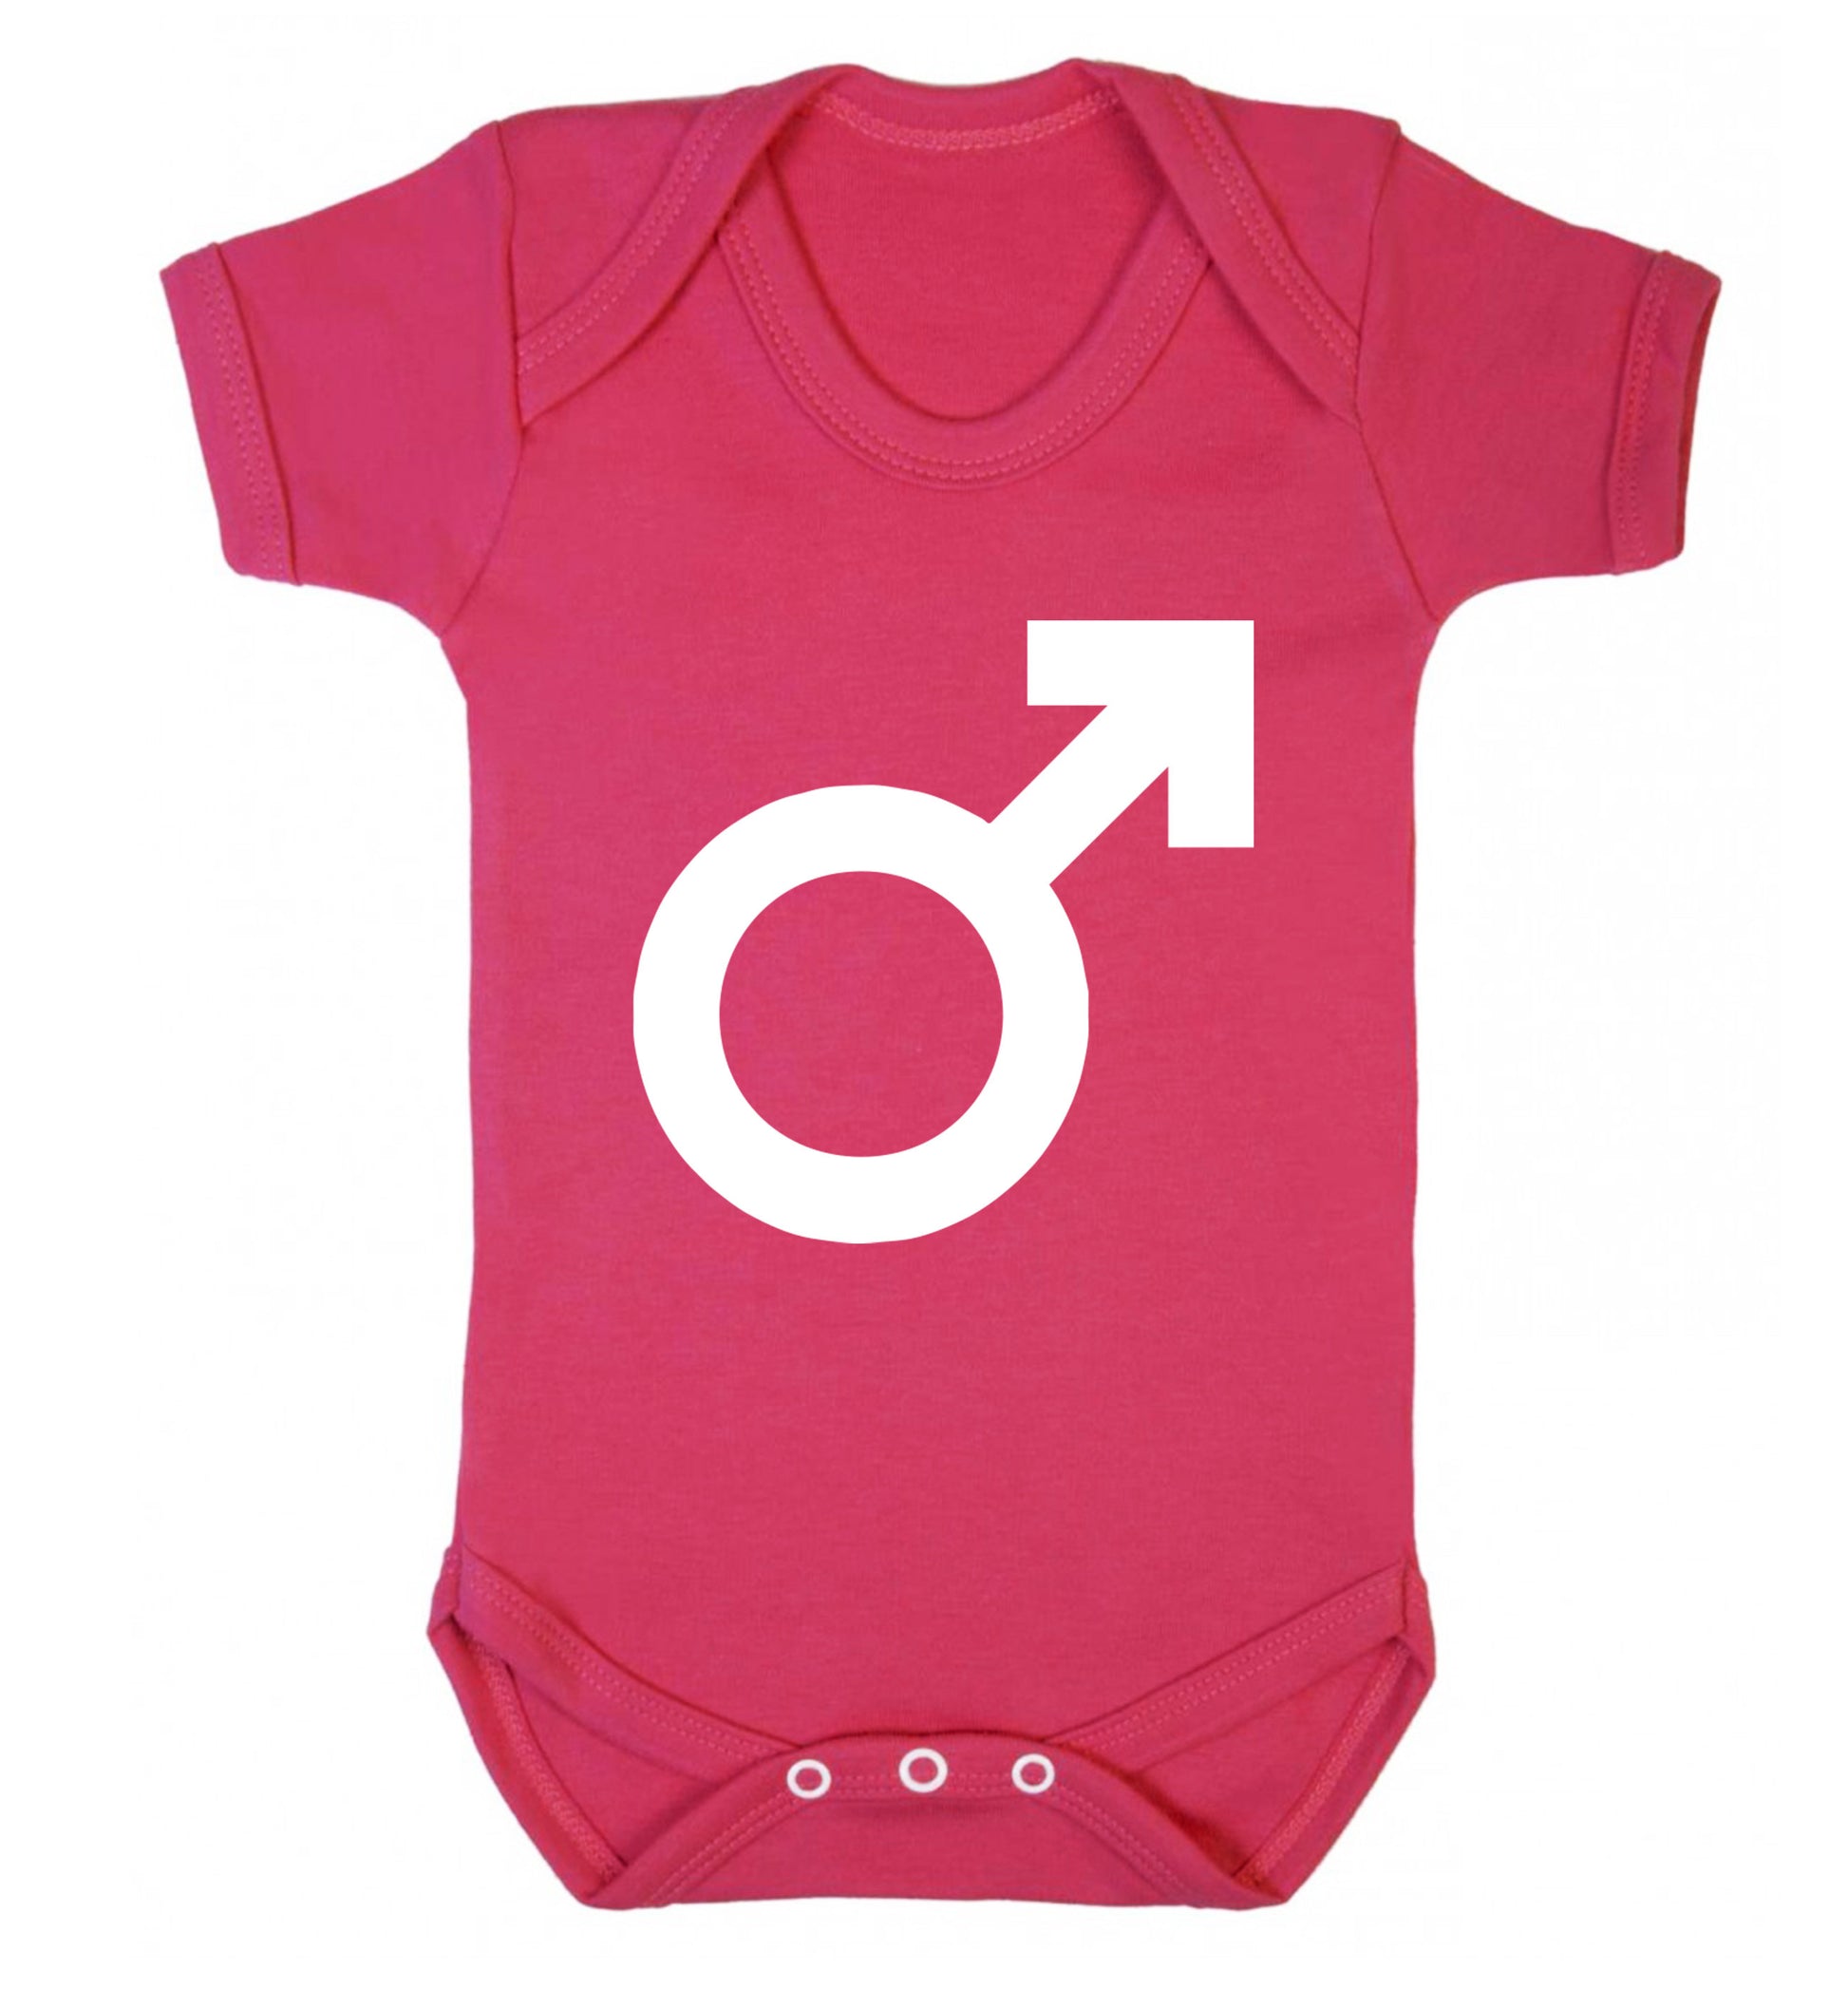 Male symbol large Baby Vest dark pink 18-24 months